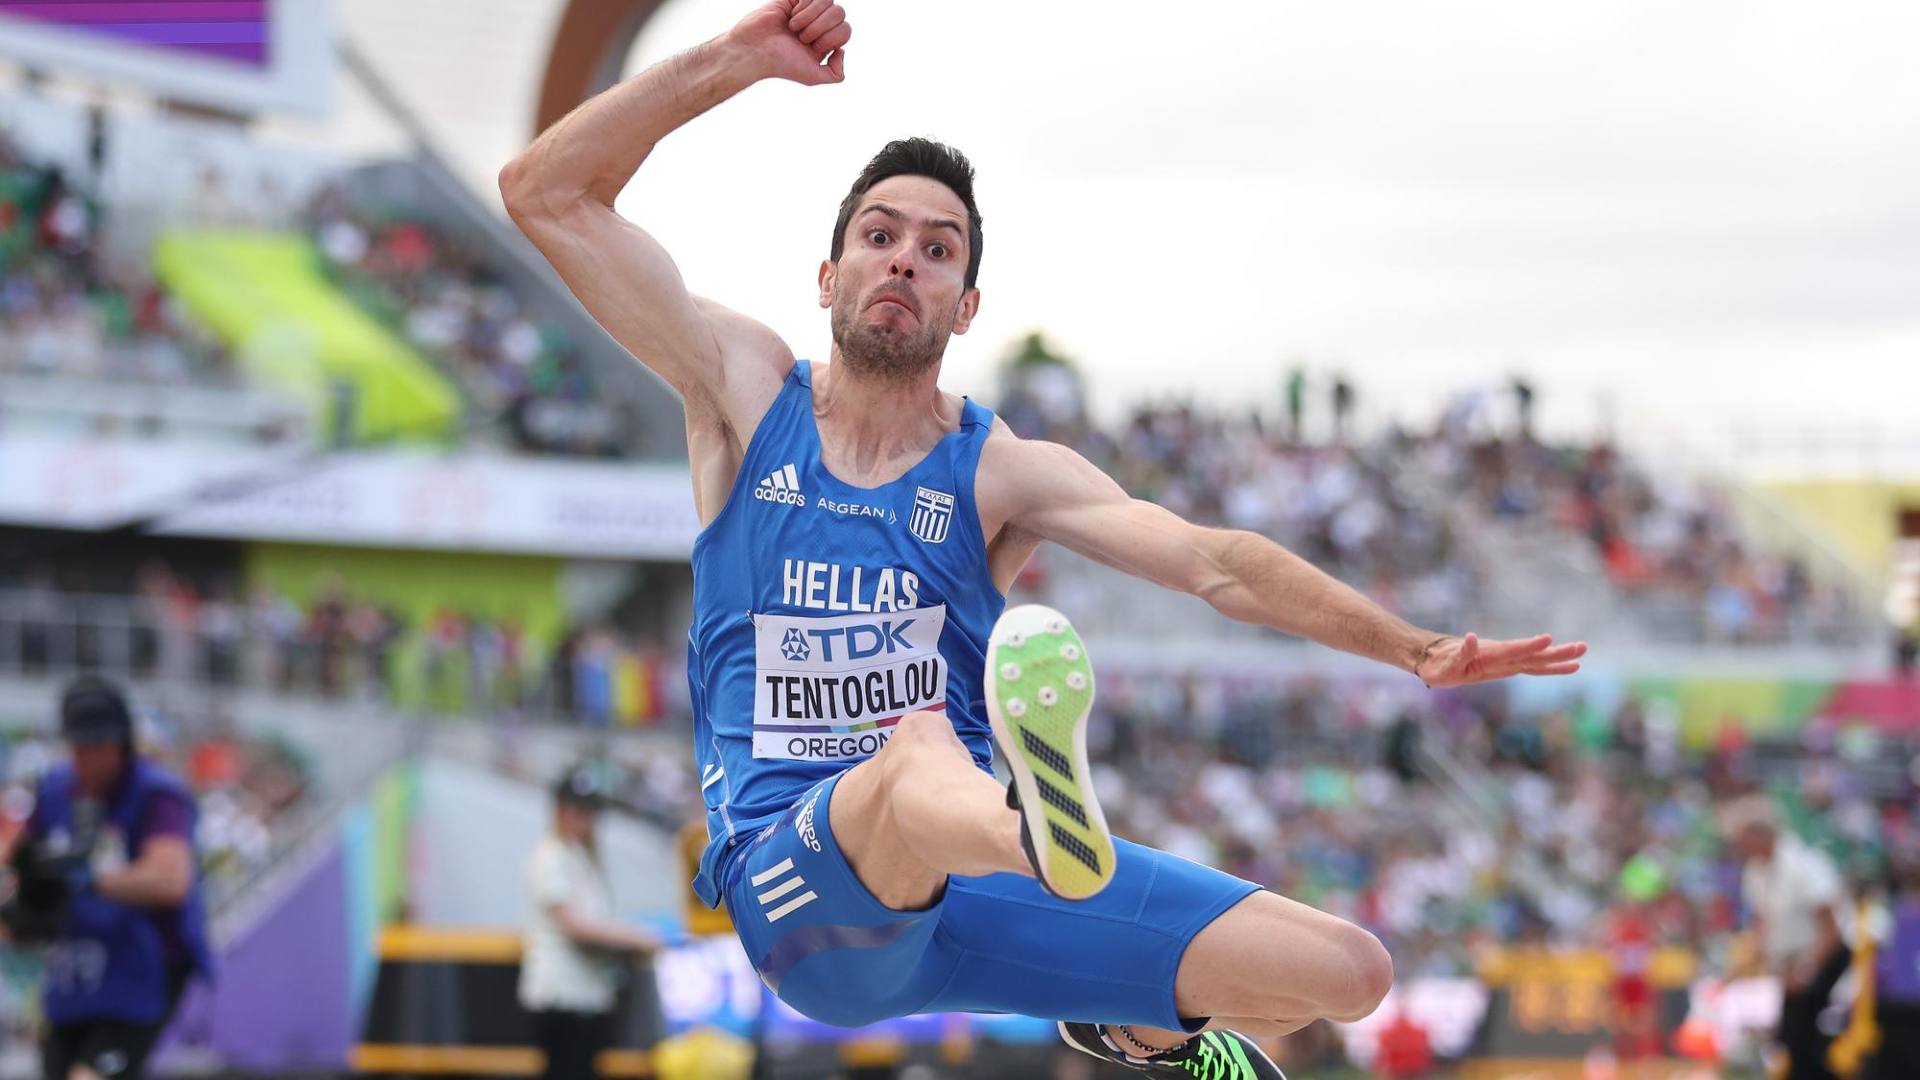 Miltiadis Tentoglou in action during World Championships 2022 in Oregon (Image Credits - European Athletics)